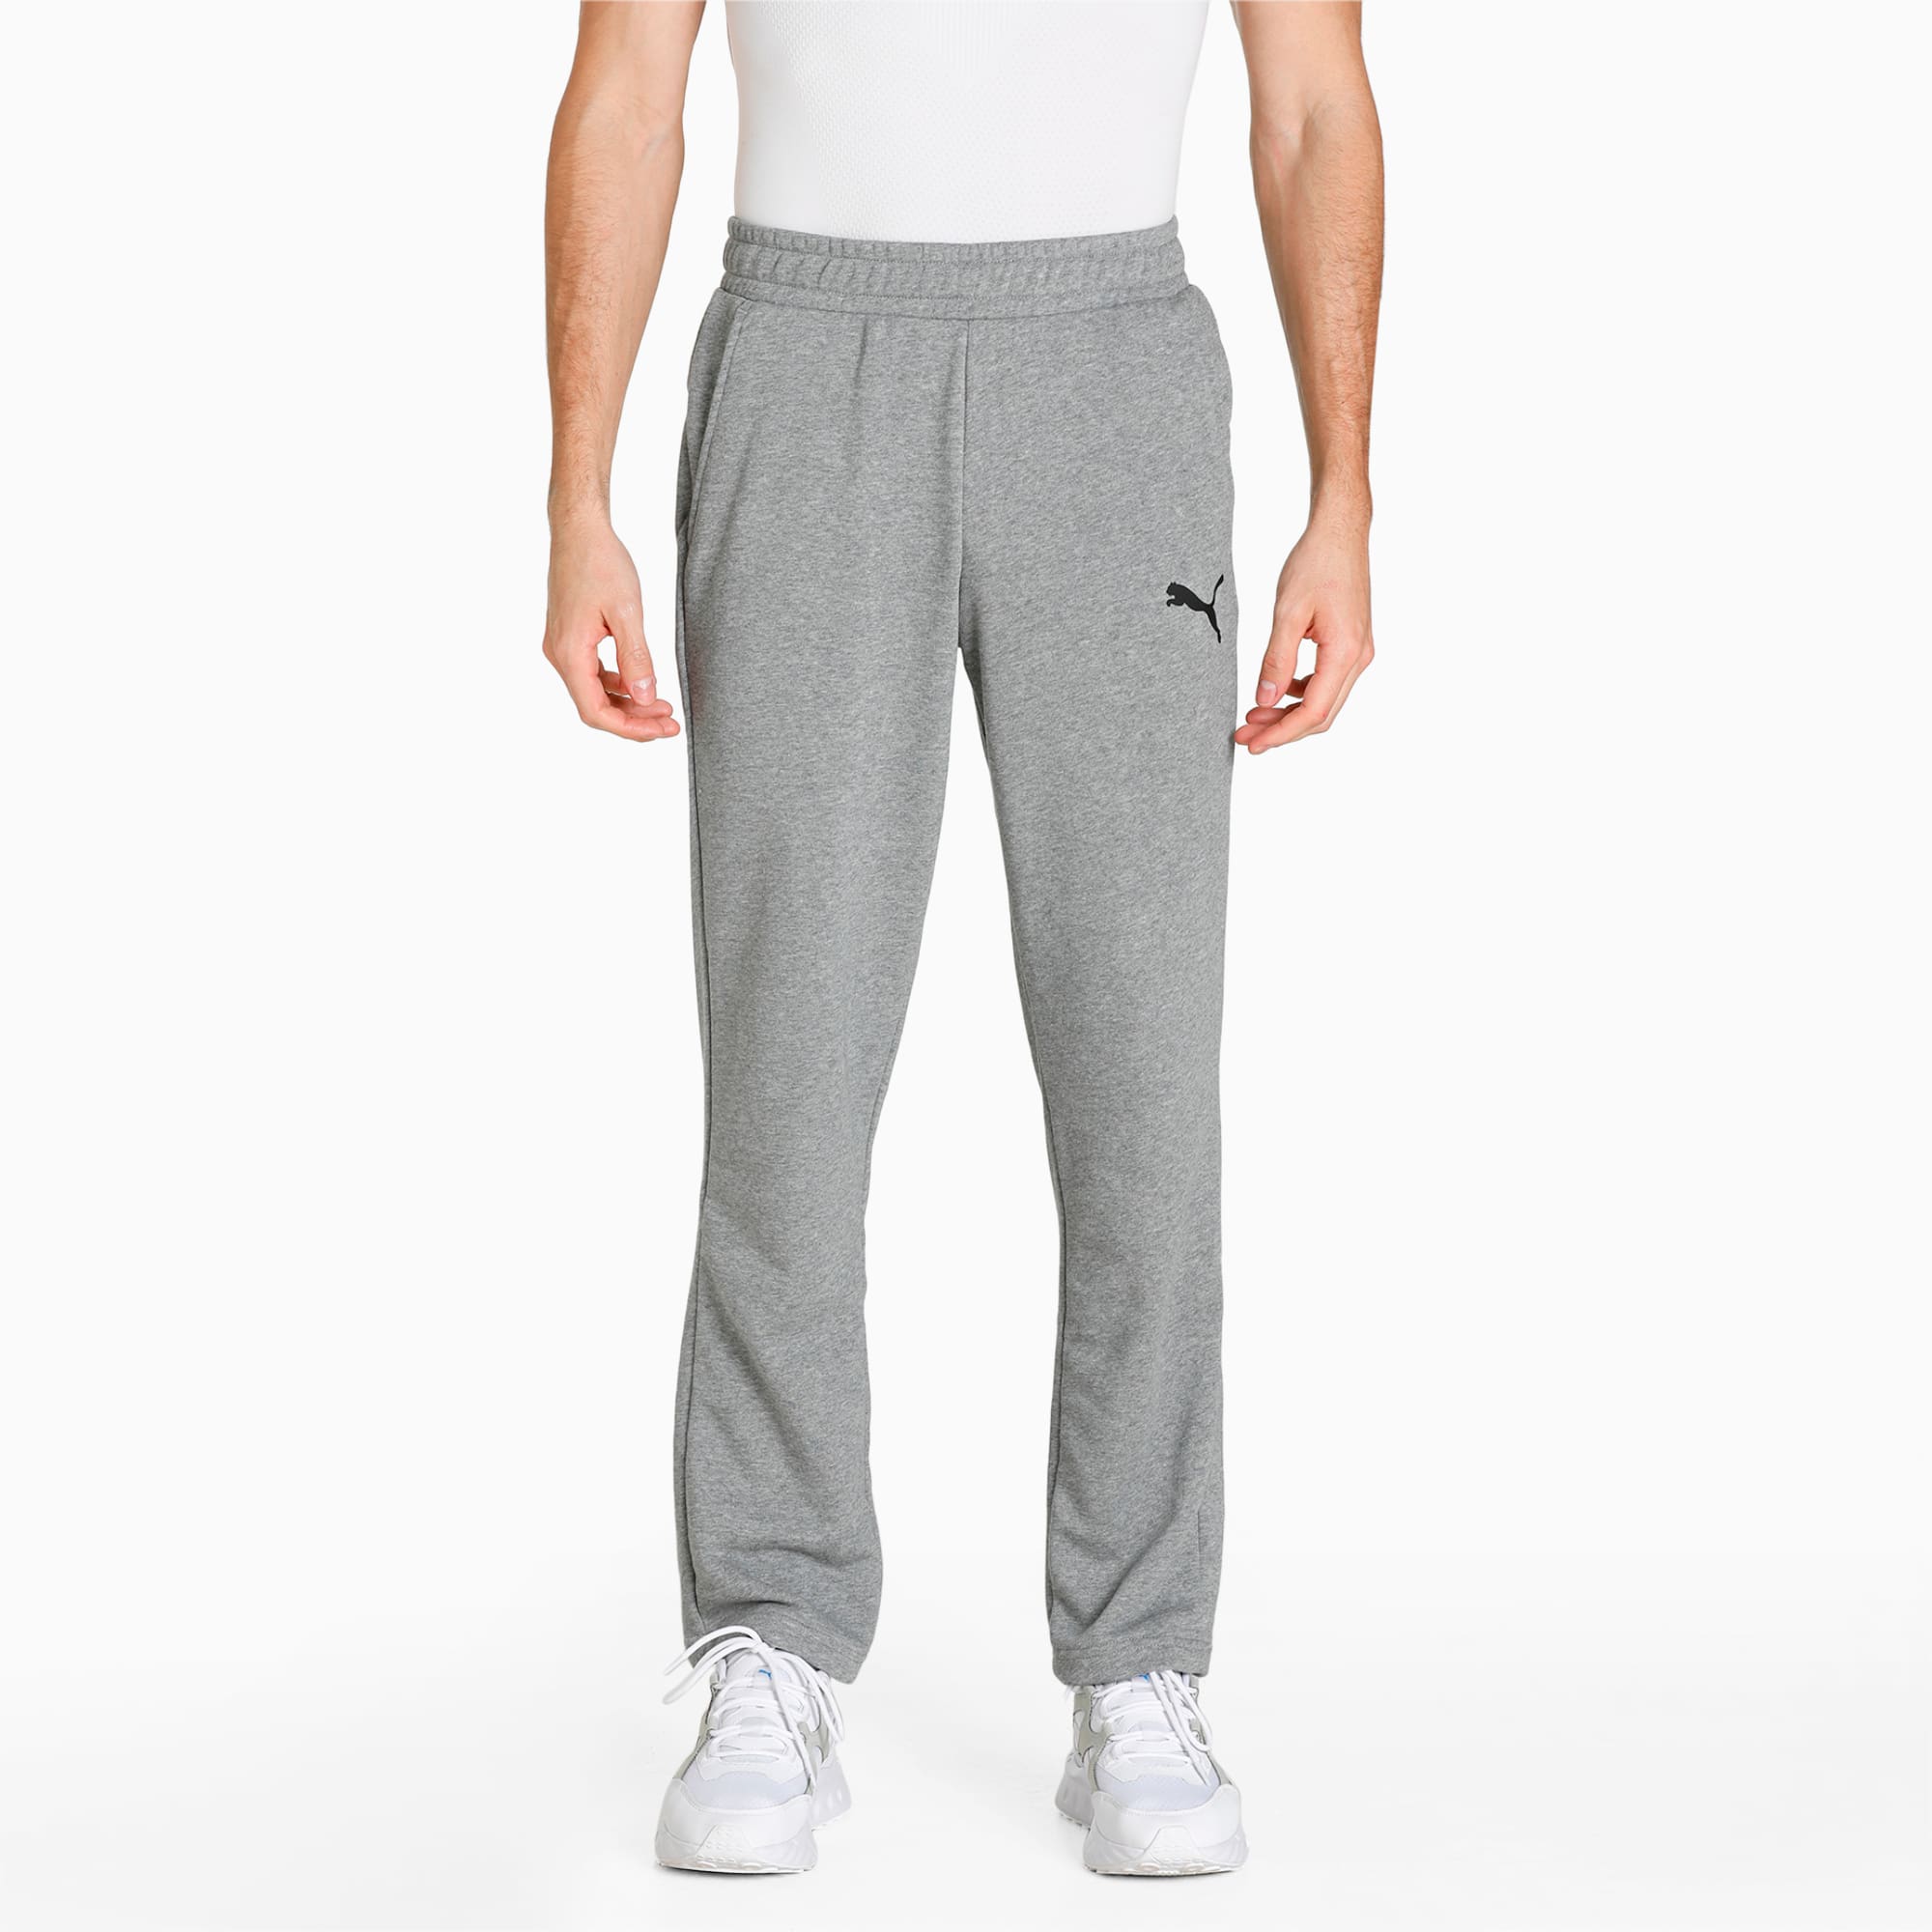 PUMA Essentials Logo Men's Sweatpants, Medium Grey Heather, Size S, Clothing